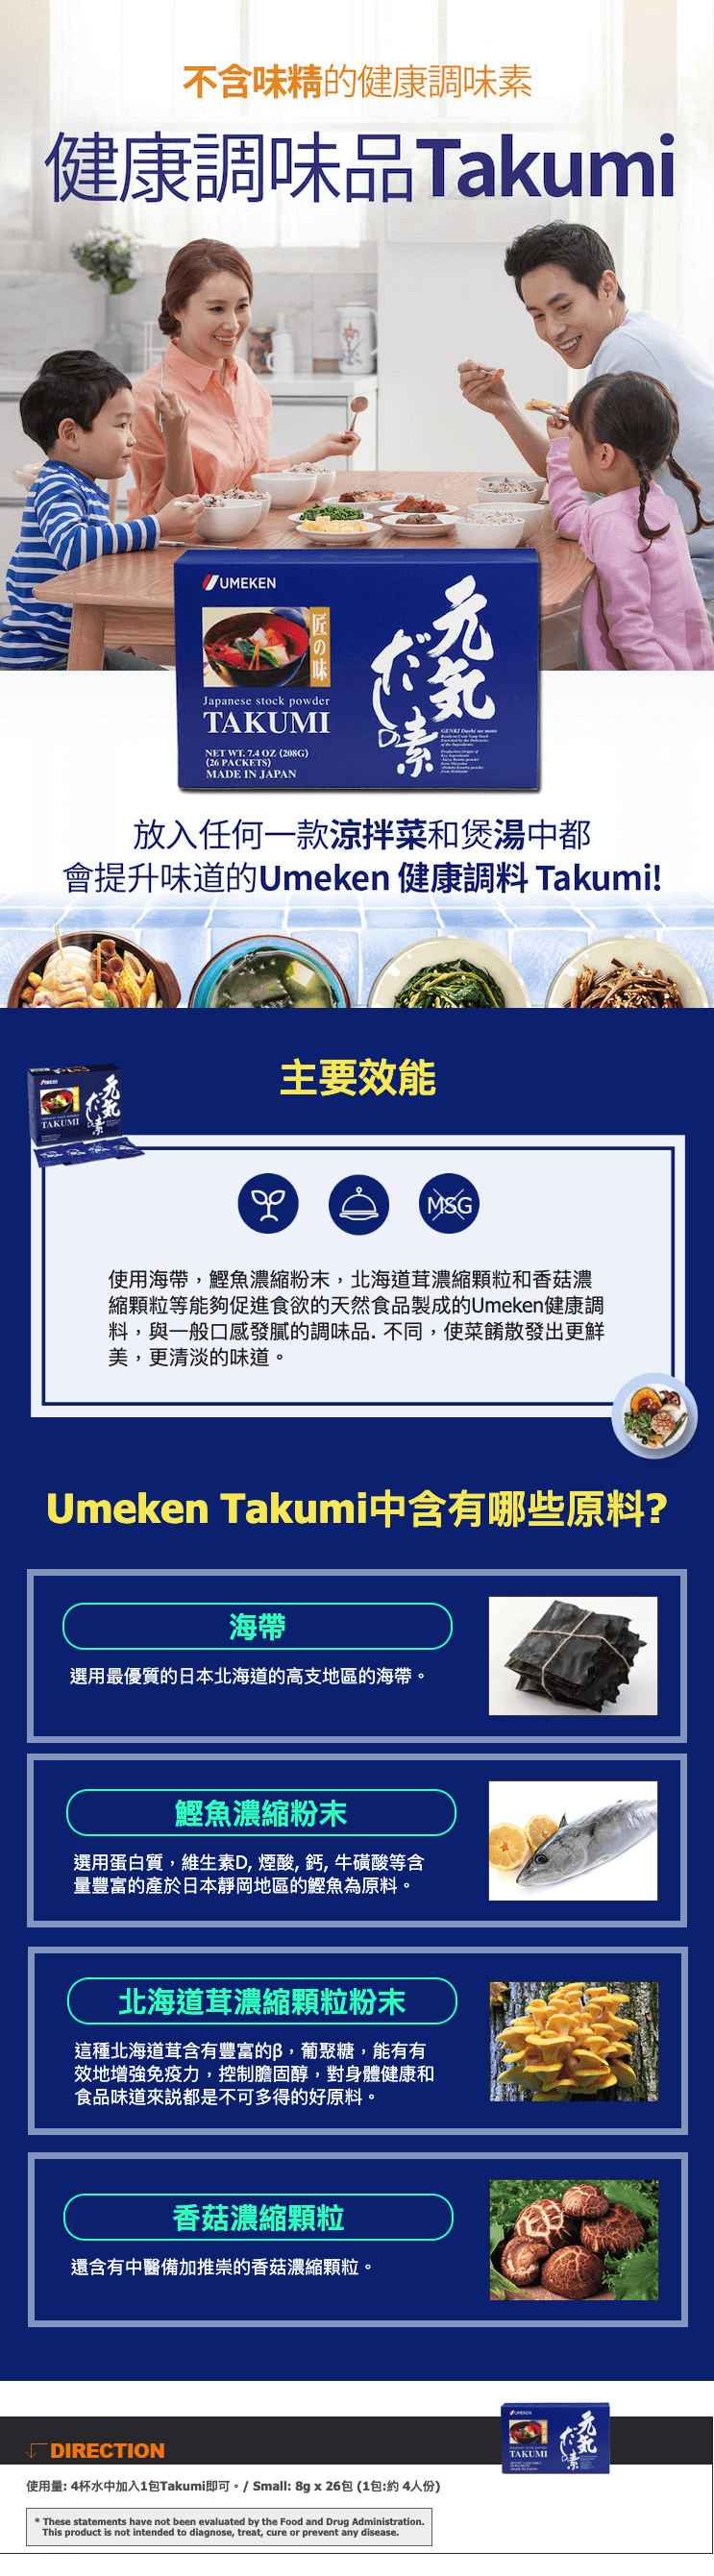 UMEKEN 元氣味素(料理用) 26包 海帶鰹魚濃縮粉末金針菇和香菇濃縮精華 天然調味料無MSG 每一餐味道都得到昇華